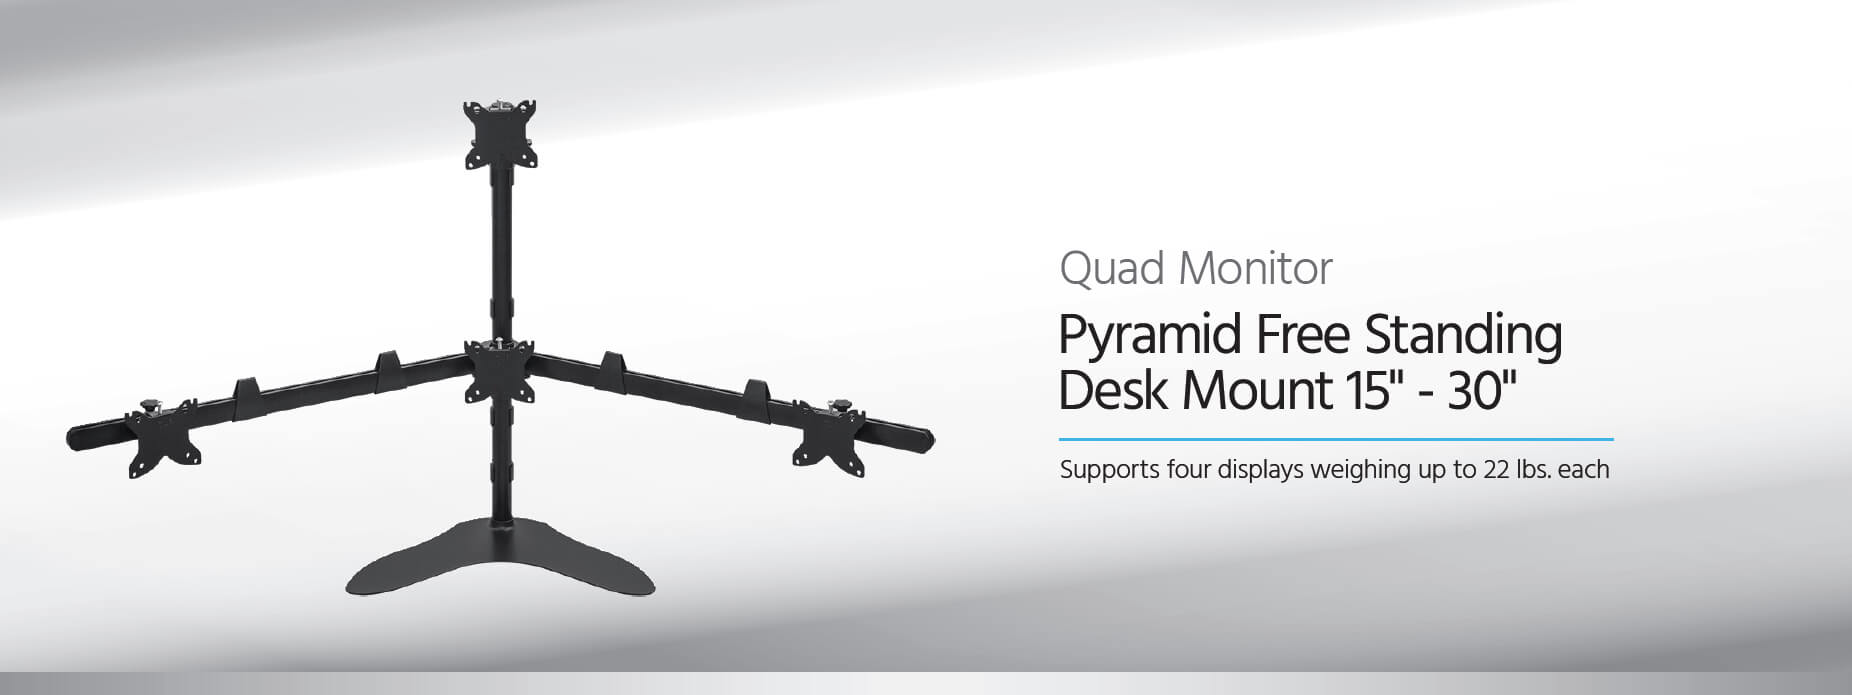 Quad Monitor Pyramid Free Standing Desk Mount